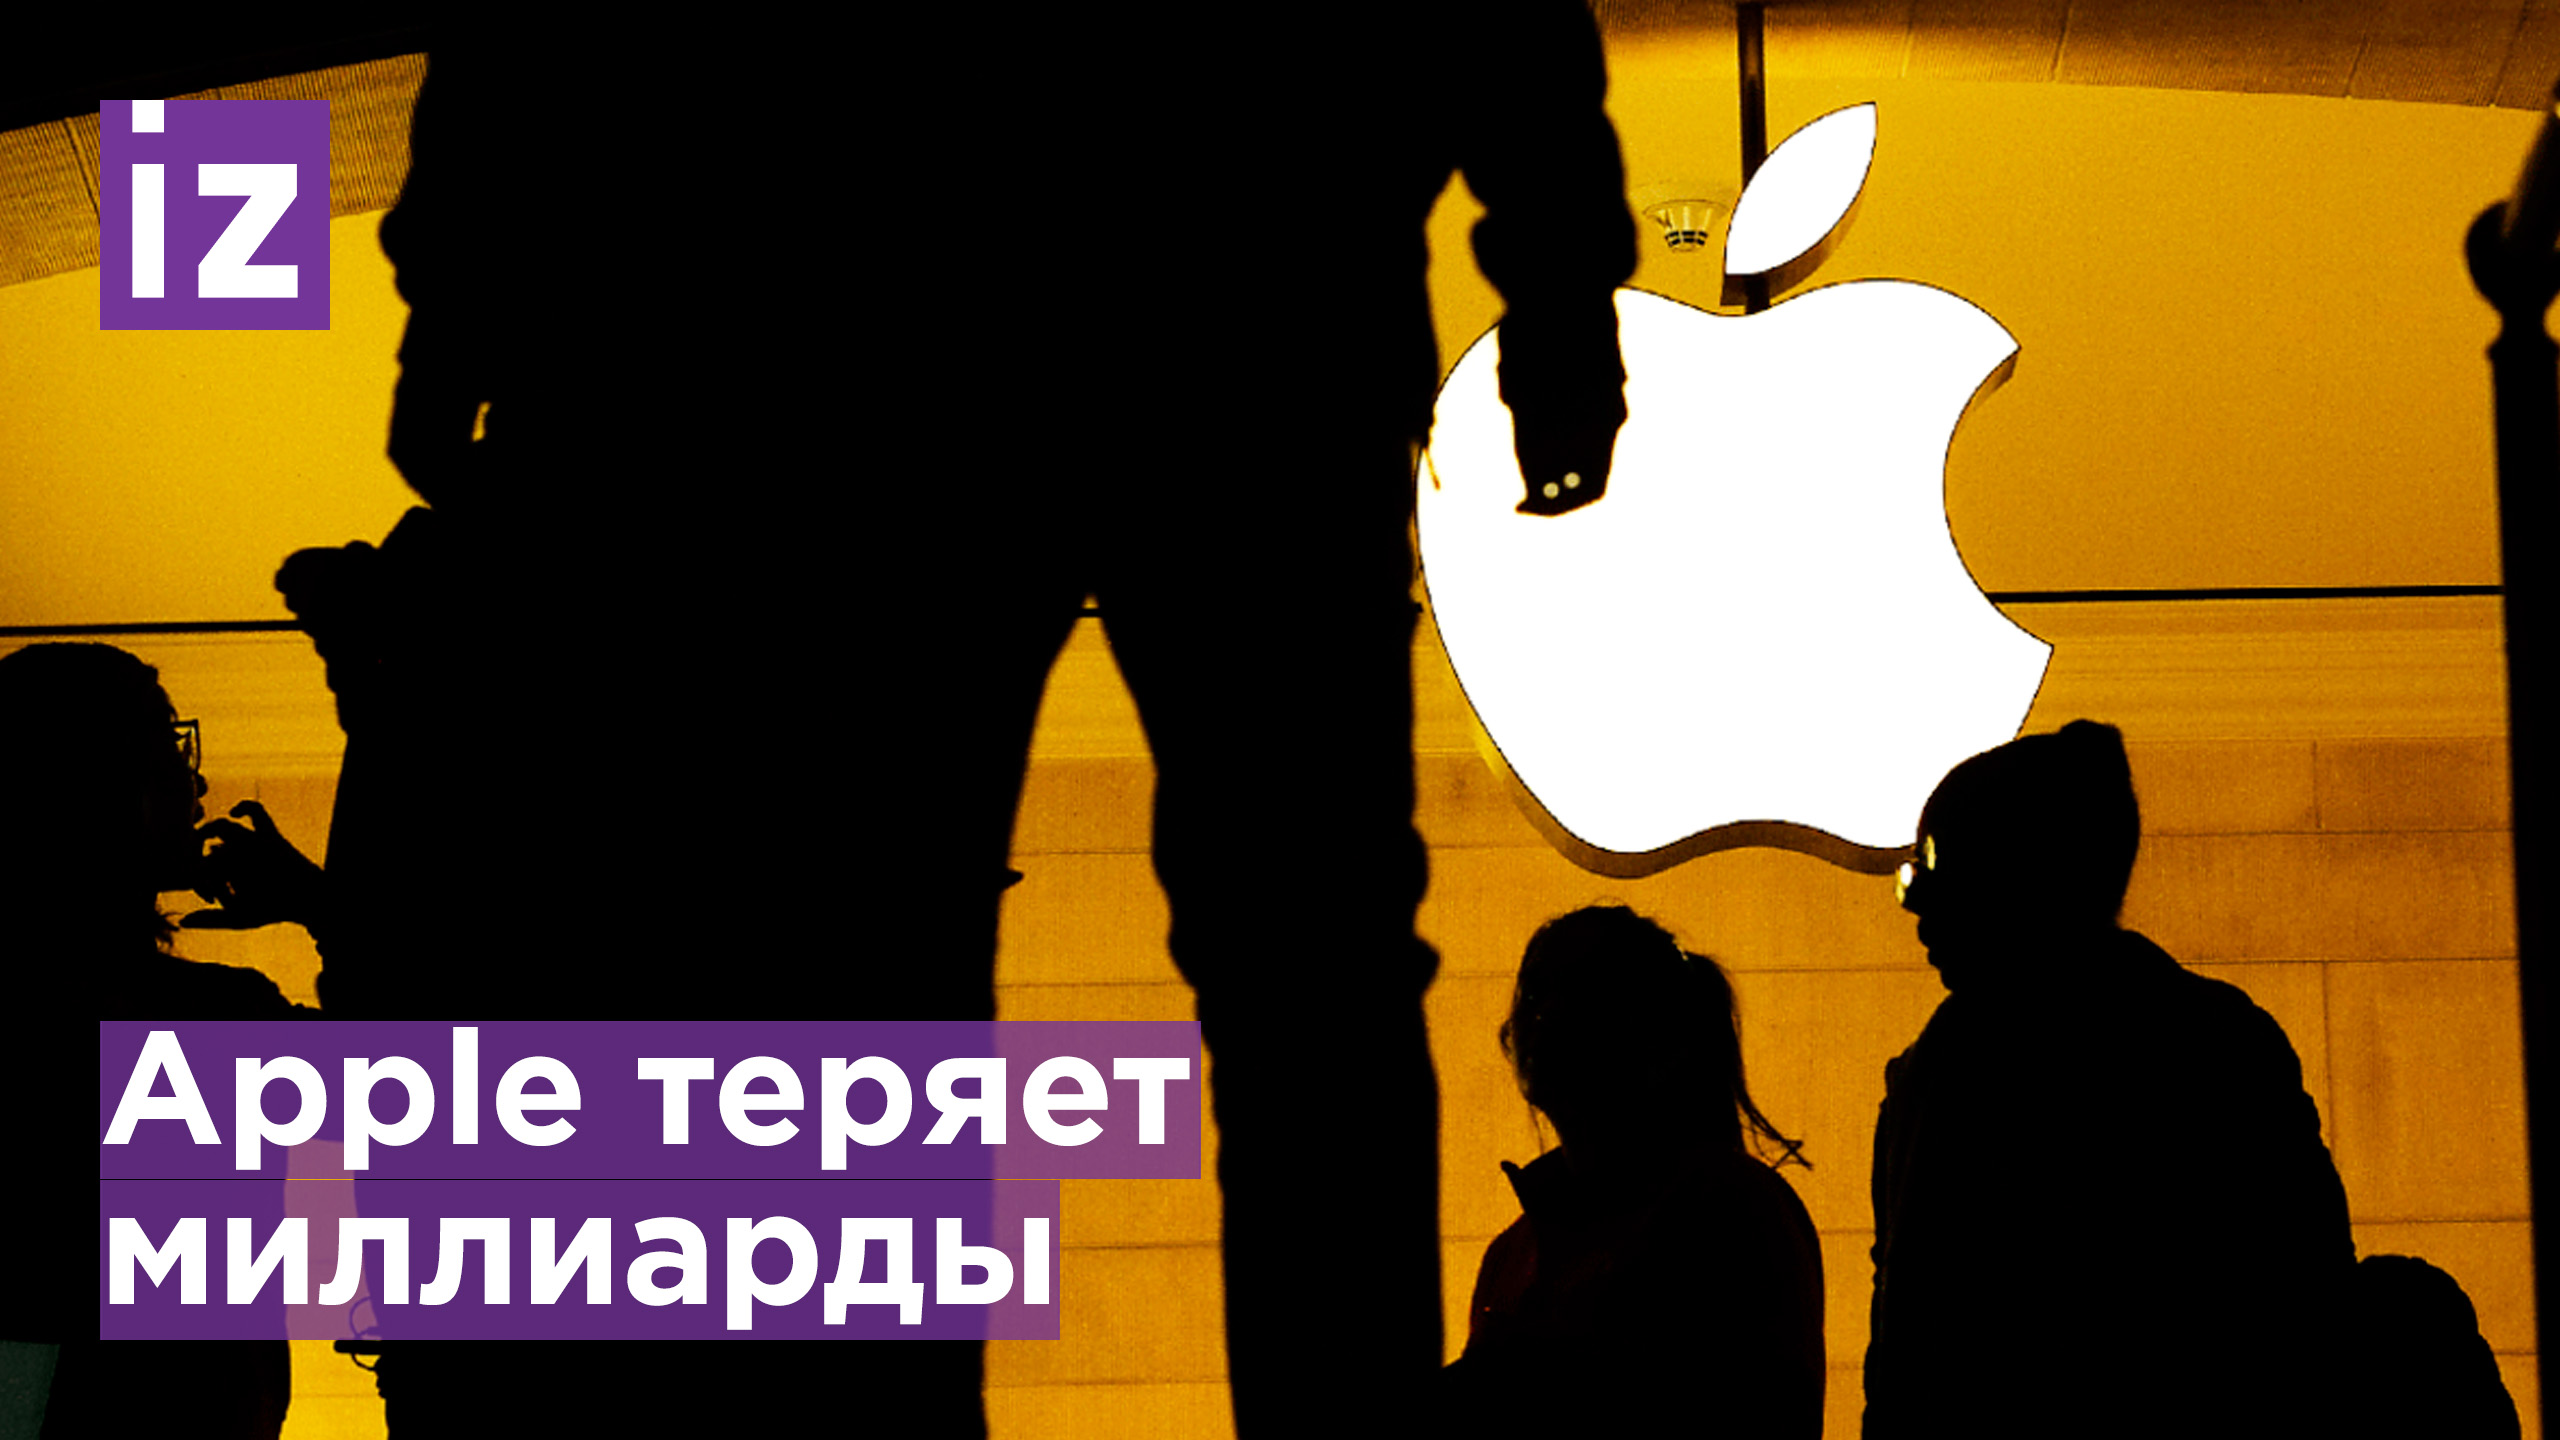 Apple ограничивает поставки из-за дефицита кремния / Известия